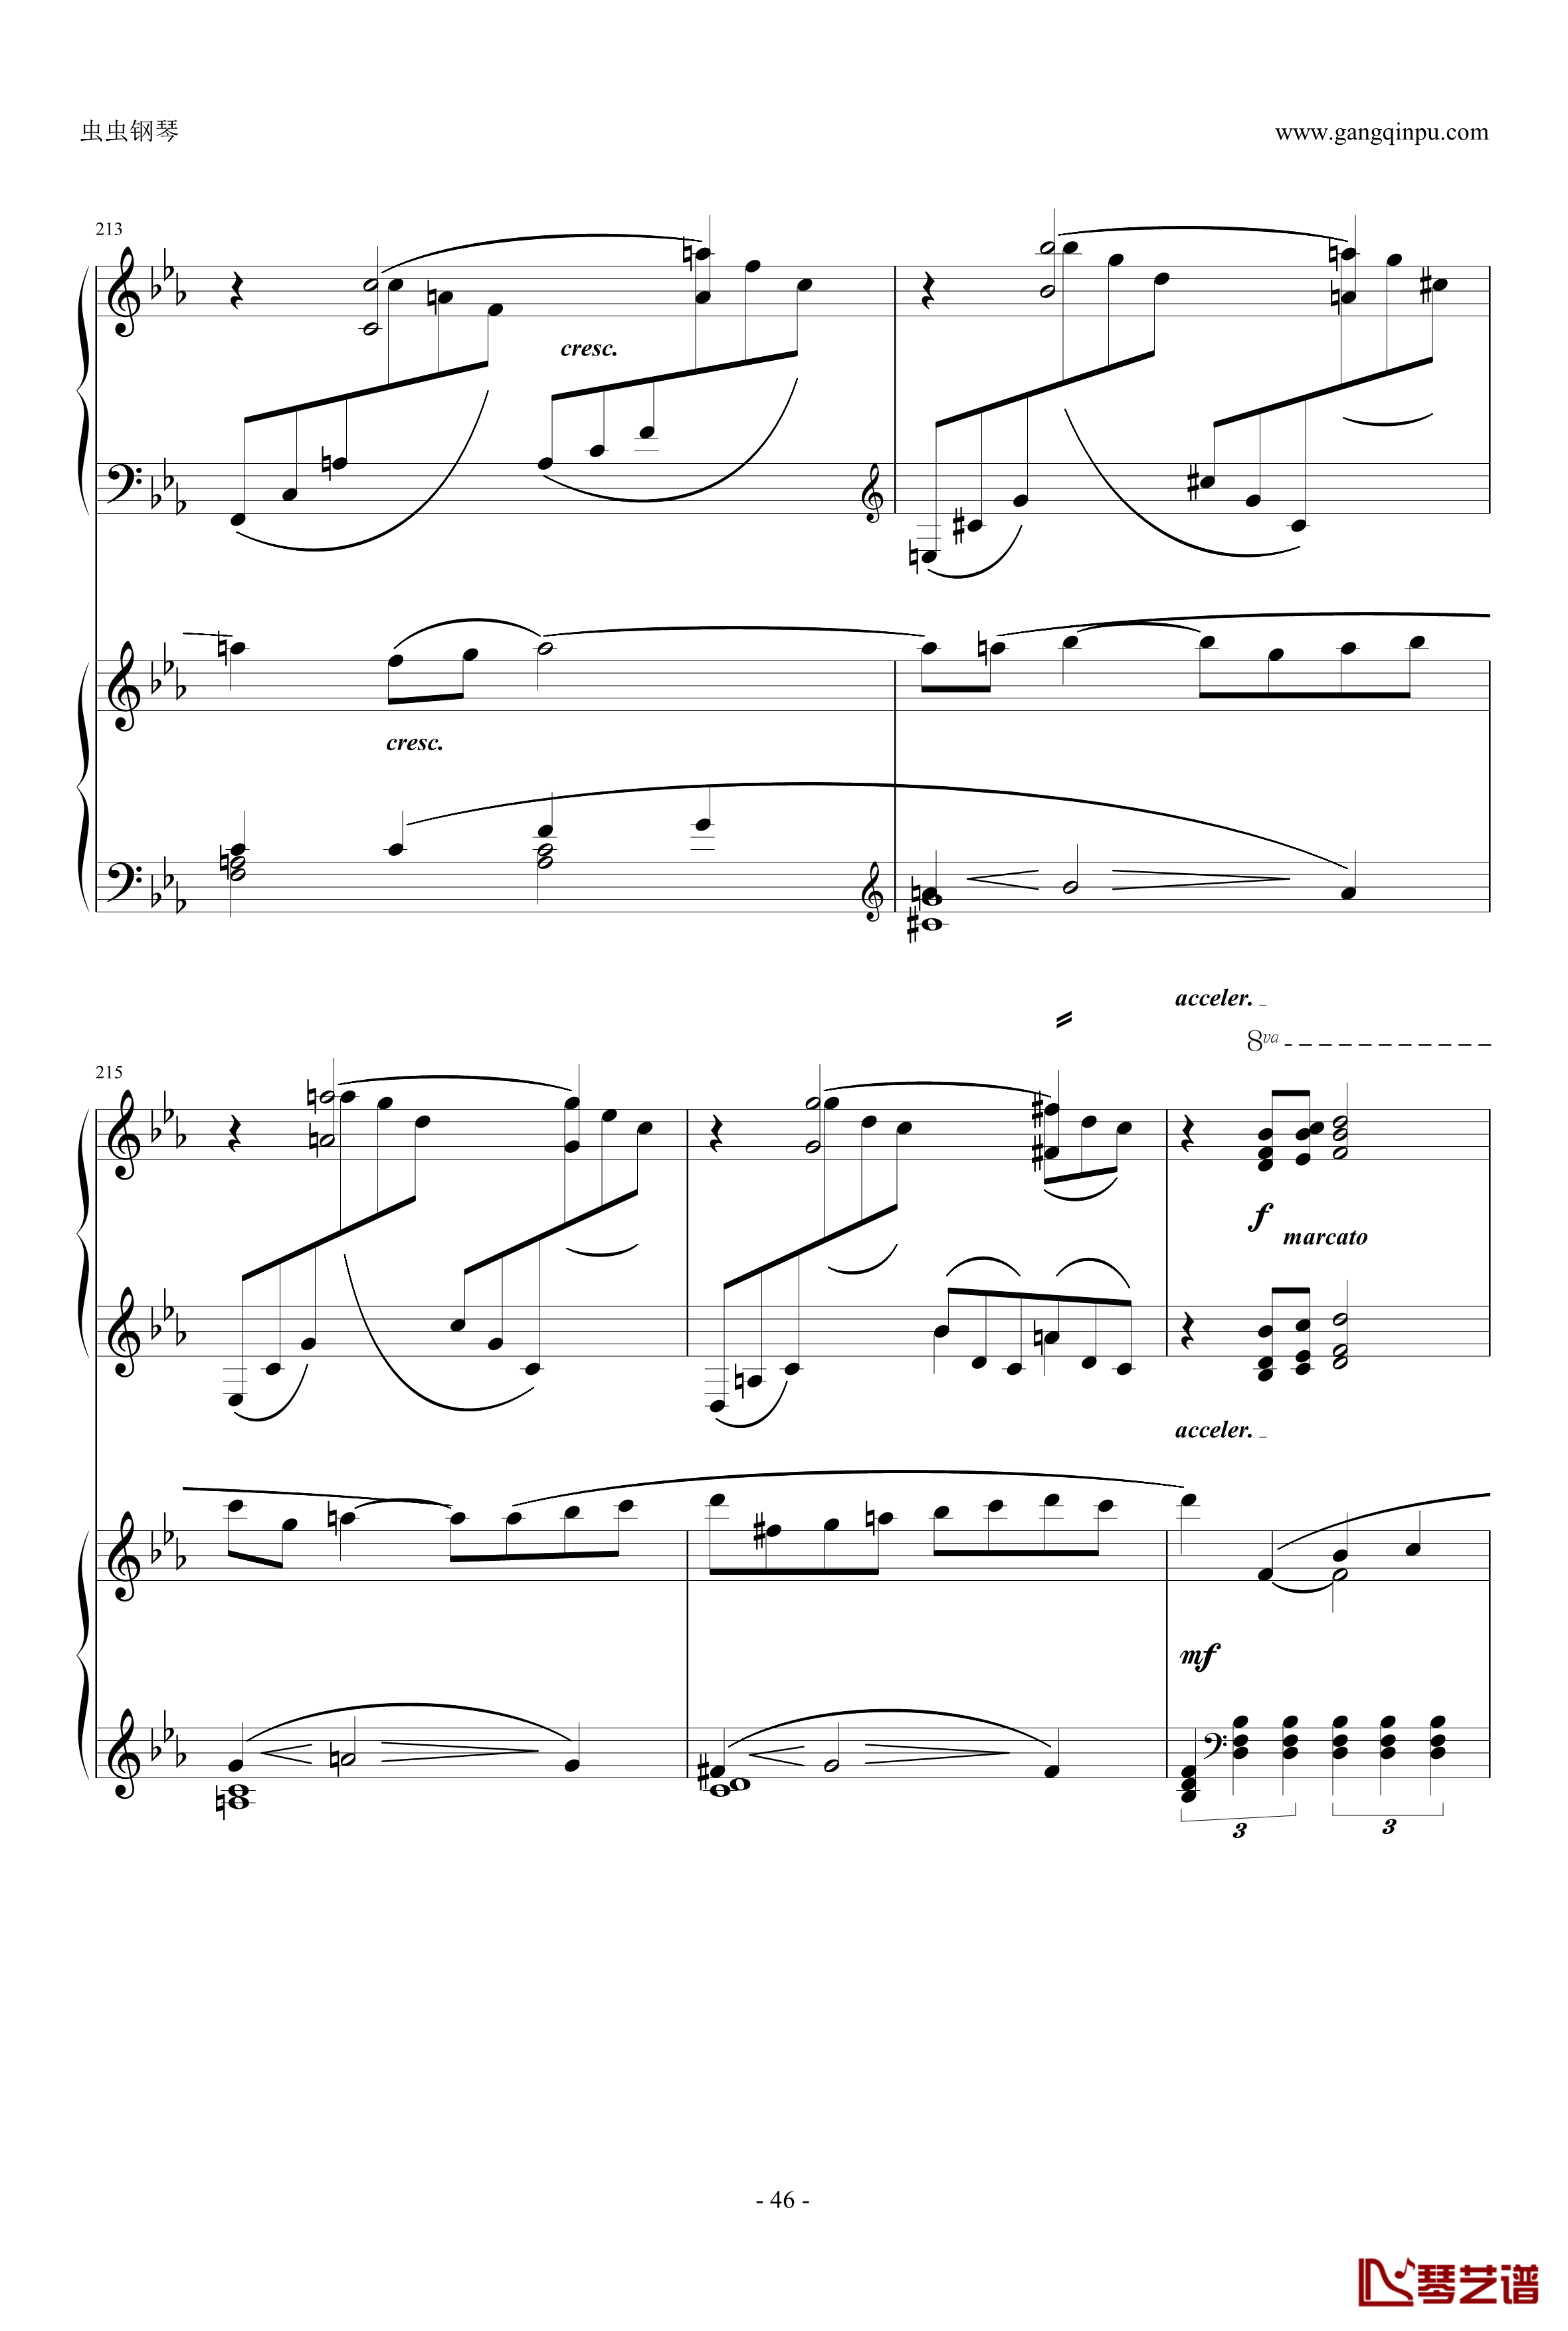 c小调第2钢琴协奏曲钢琴谱-拉赫马尼若夫46